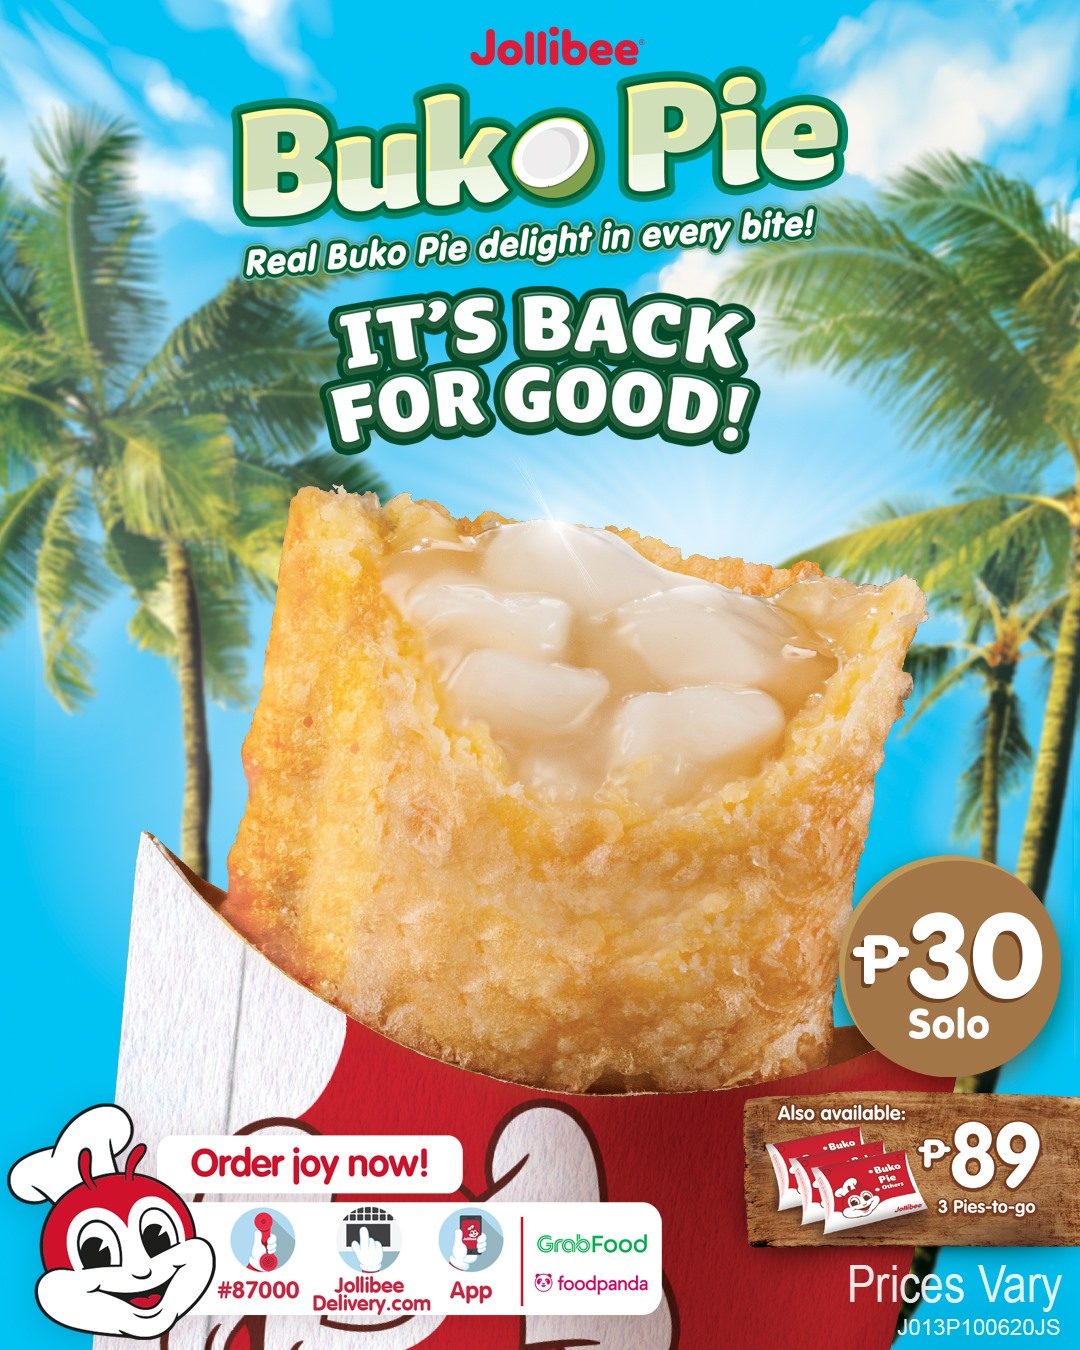 Jollibee brings back Buko Pie for good